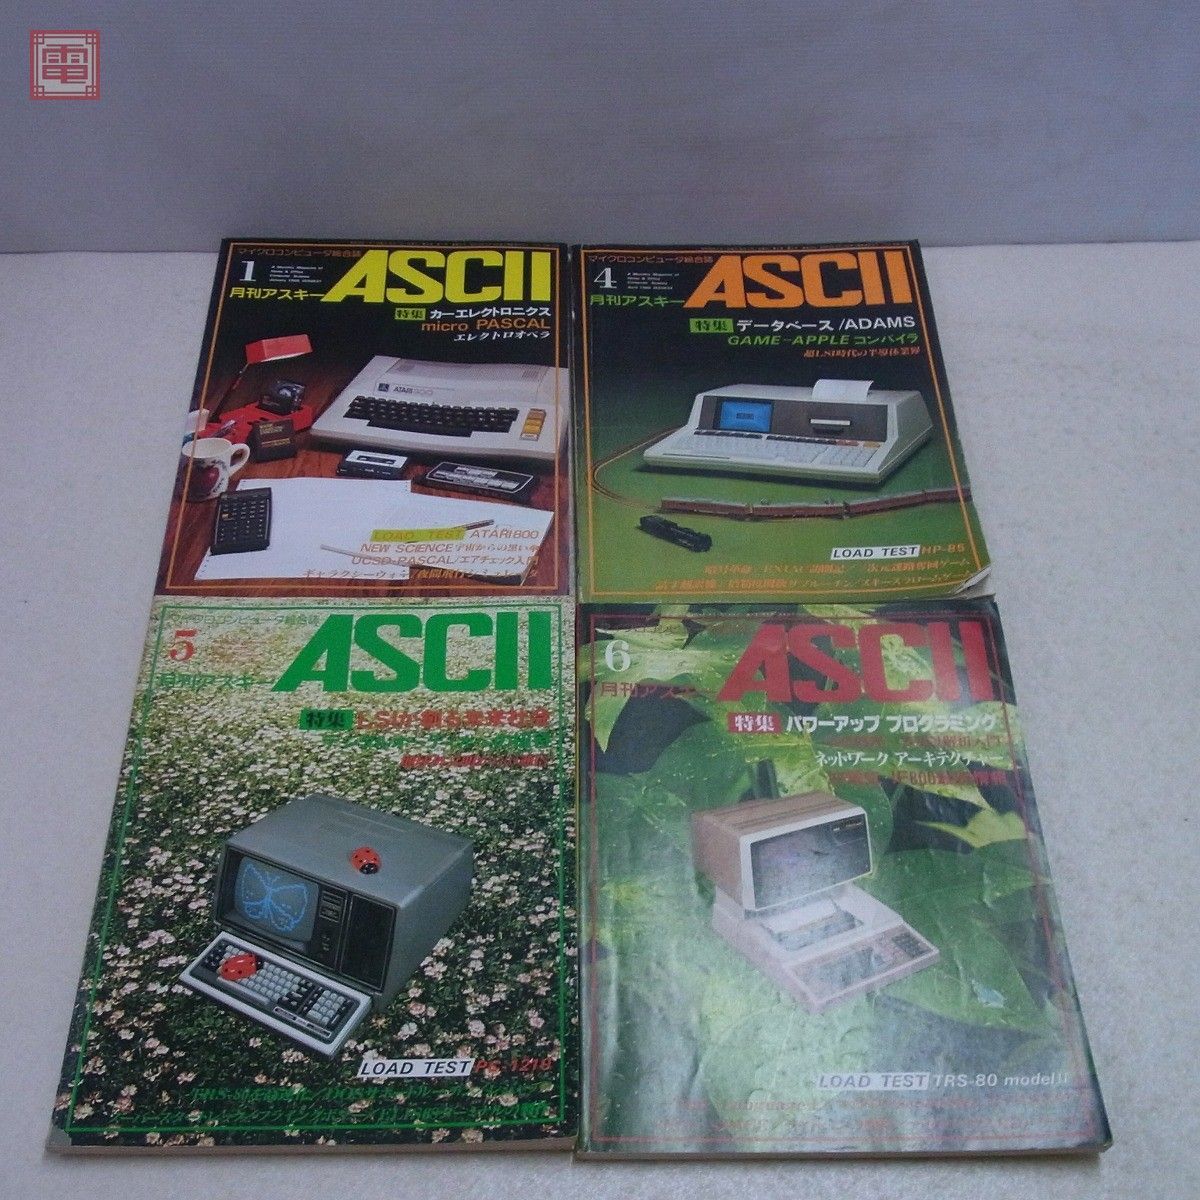  magazine monthly ASCII 1980 year 10 pcs. set don't fit ASCII[20